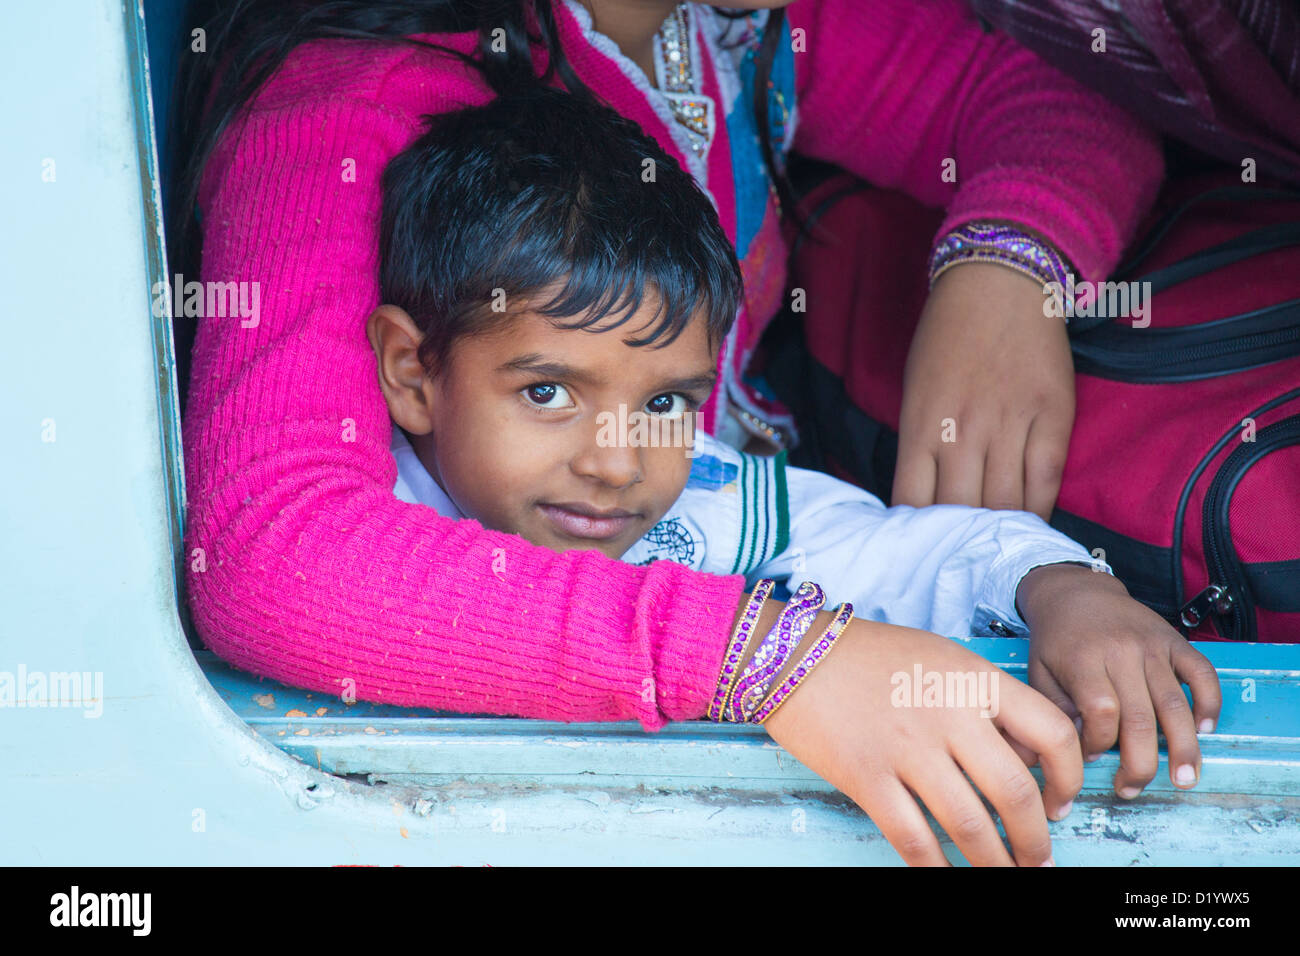 Indian boy on a train in New Delhi Railway Station, New Delhi, India Stock Photo